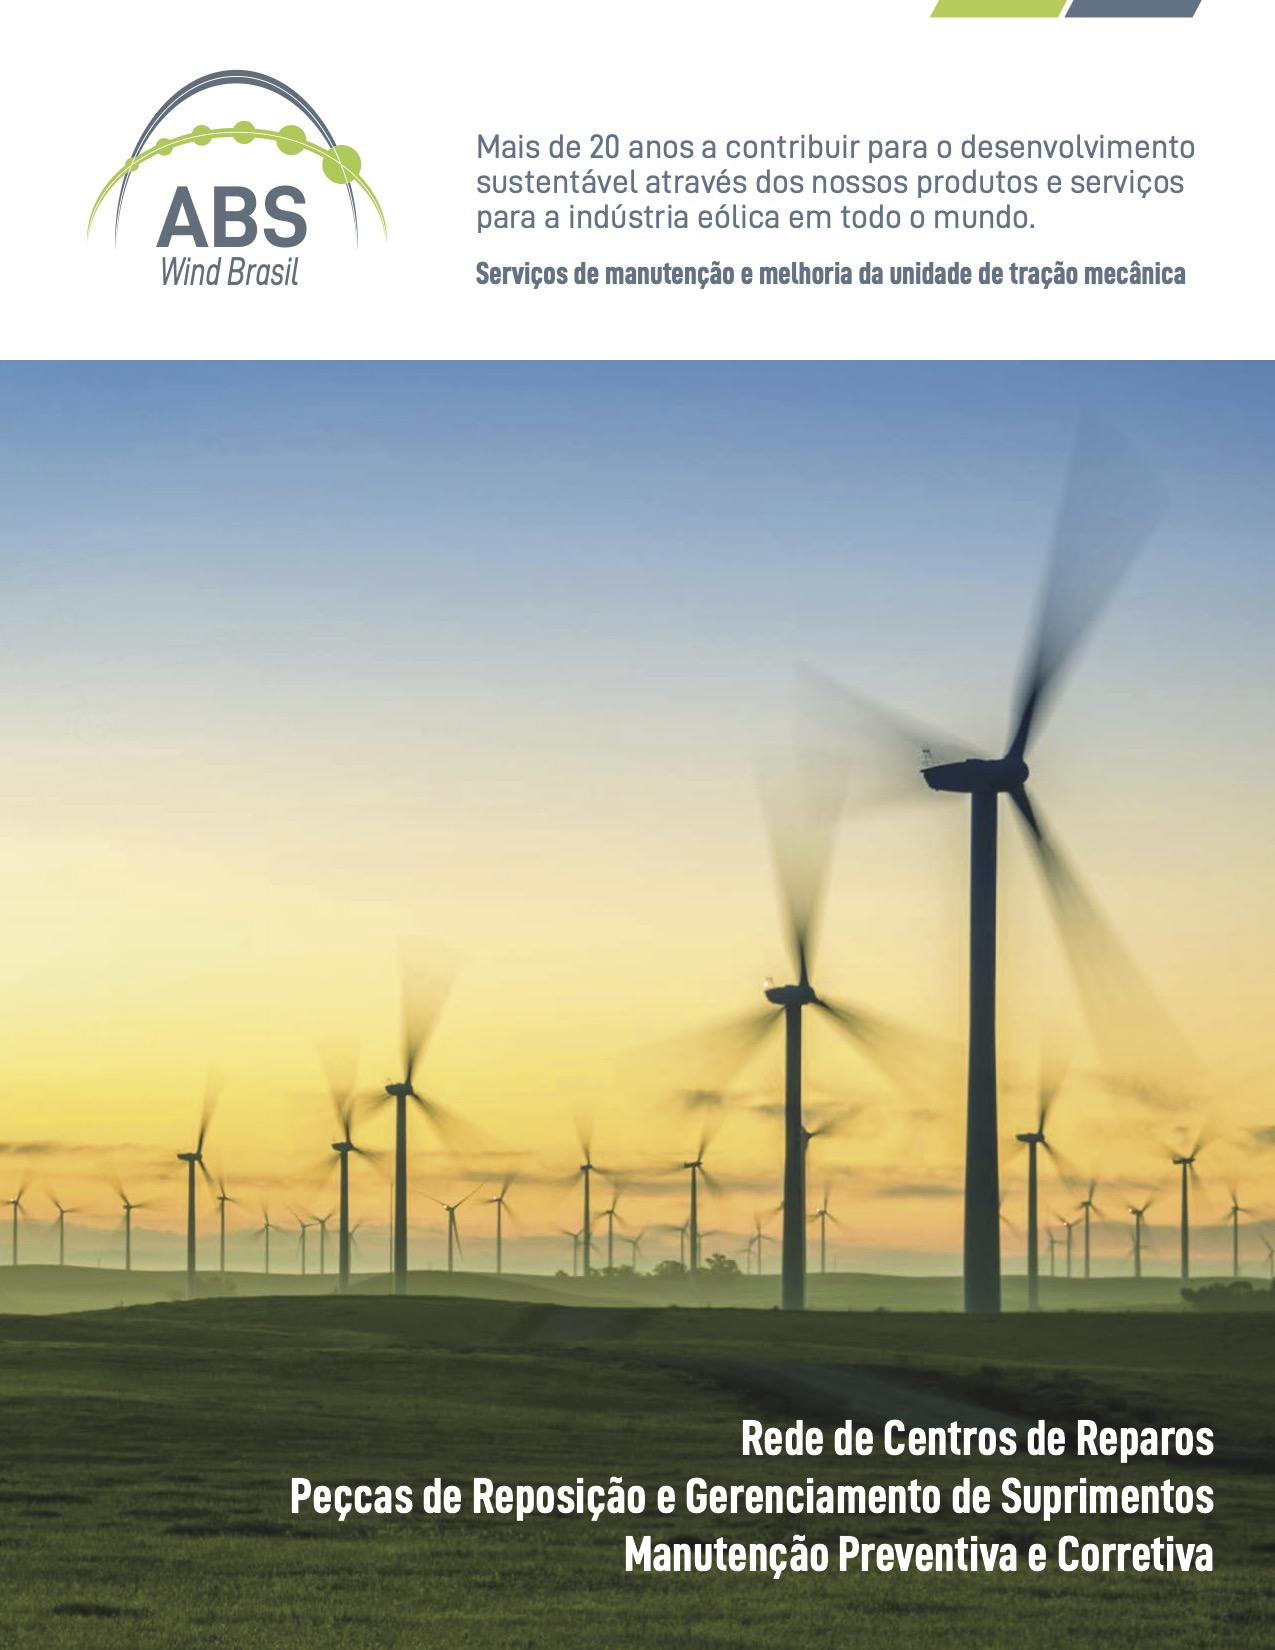 ABS Wind Brasil's brochure